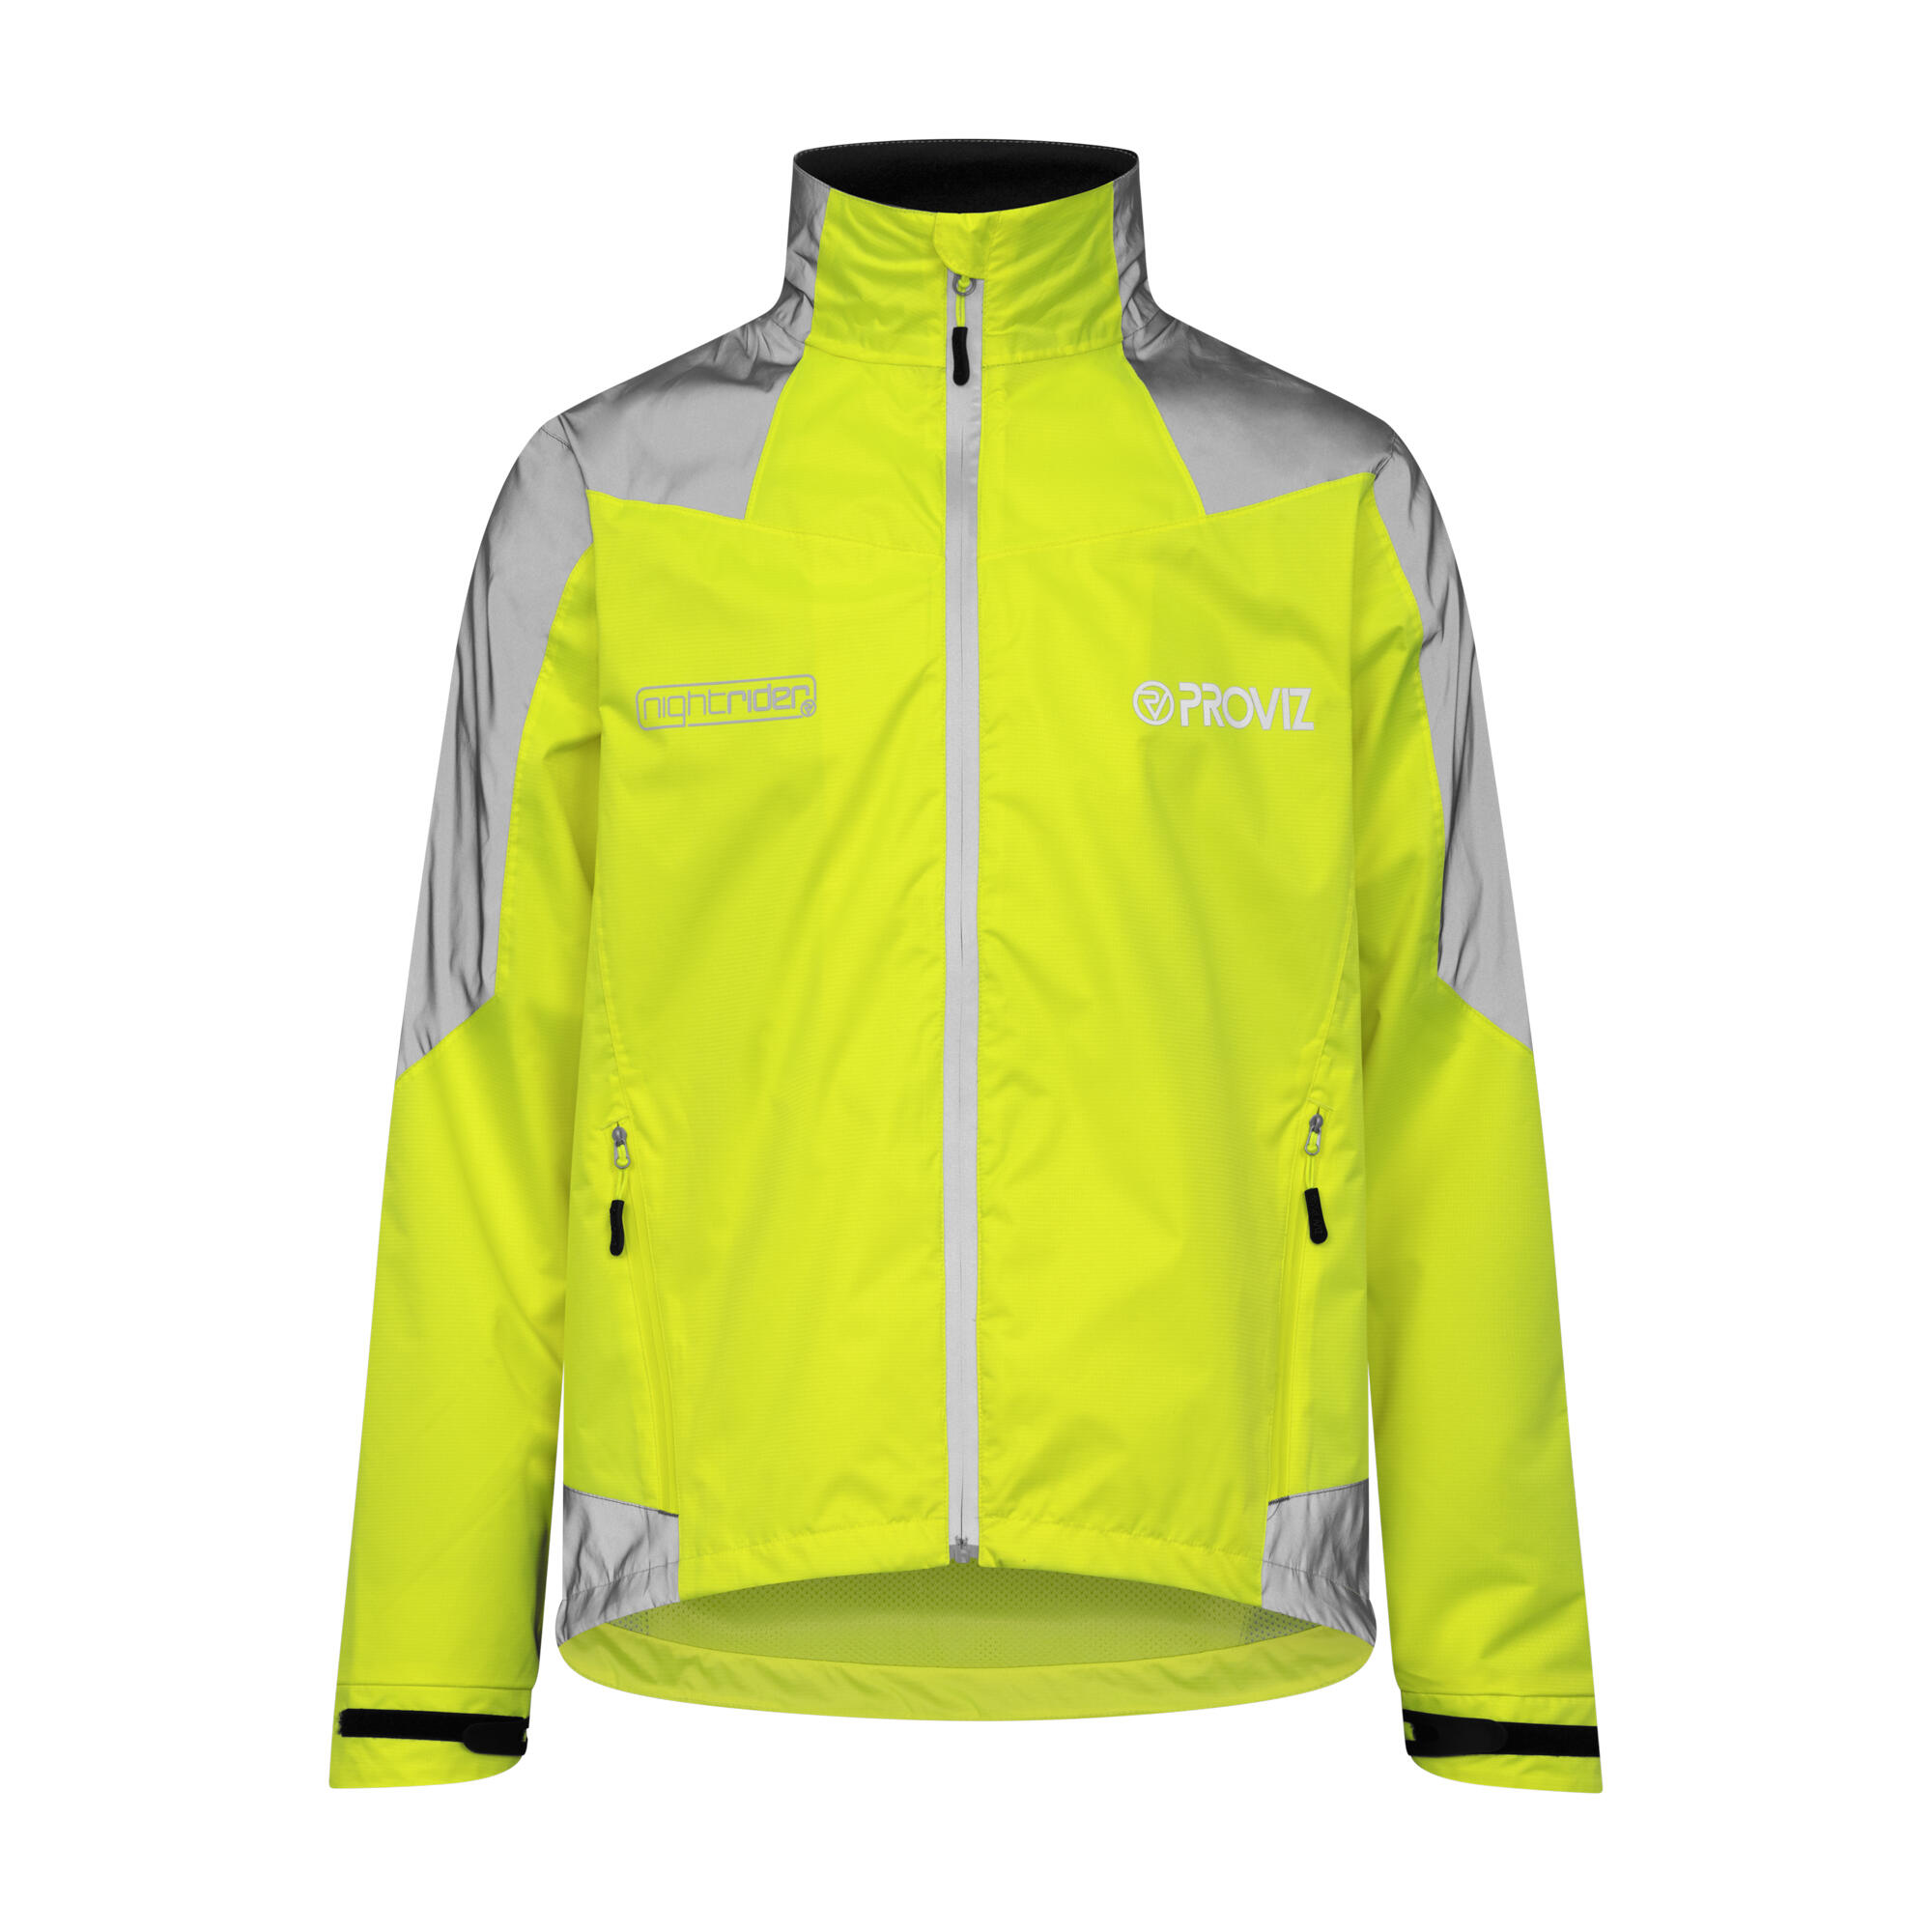 Proviz Men's Nightrider Reflective Waterproof Cycling Jacket 7/7